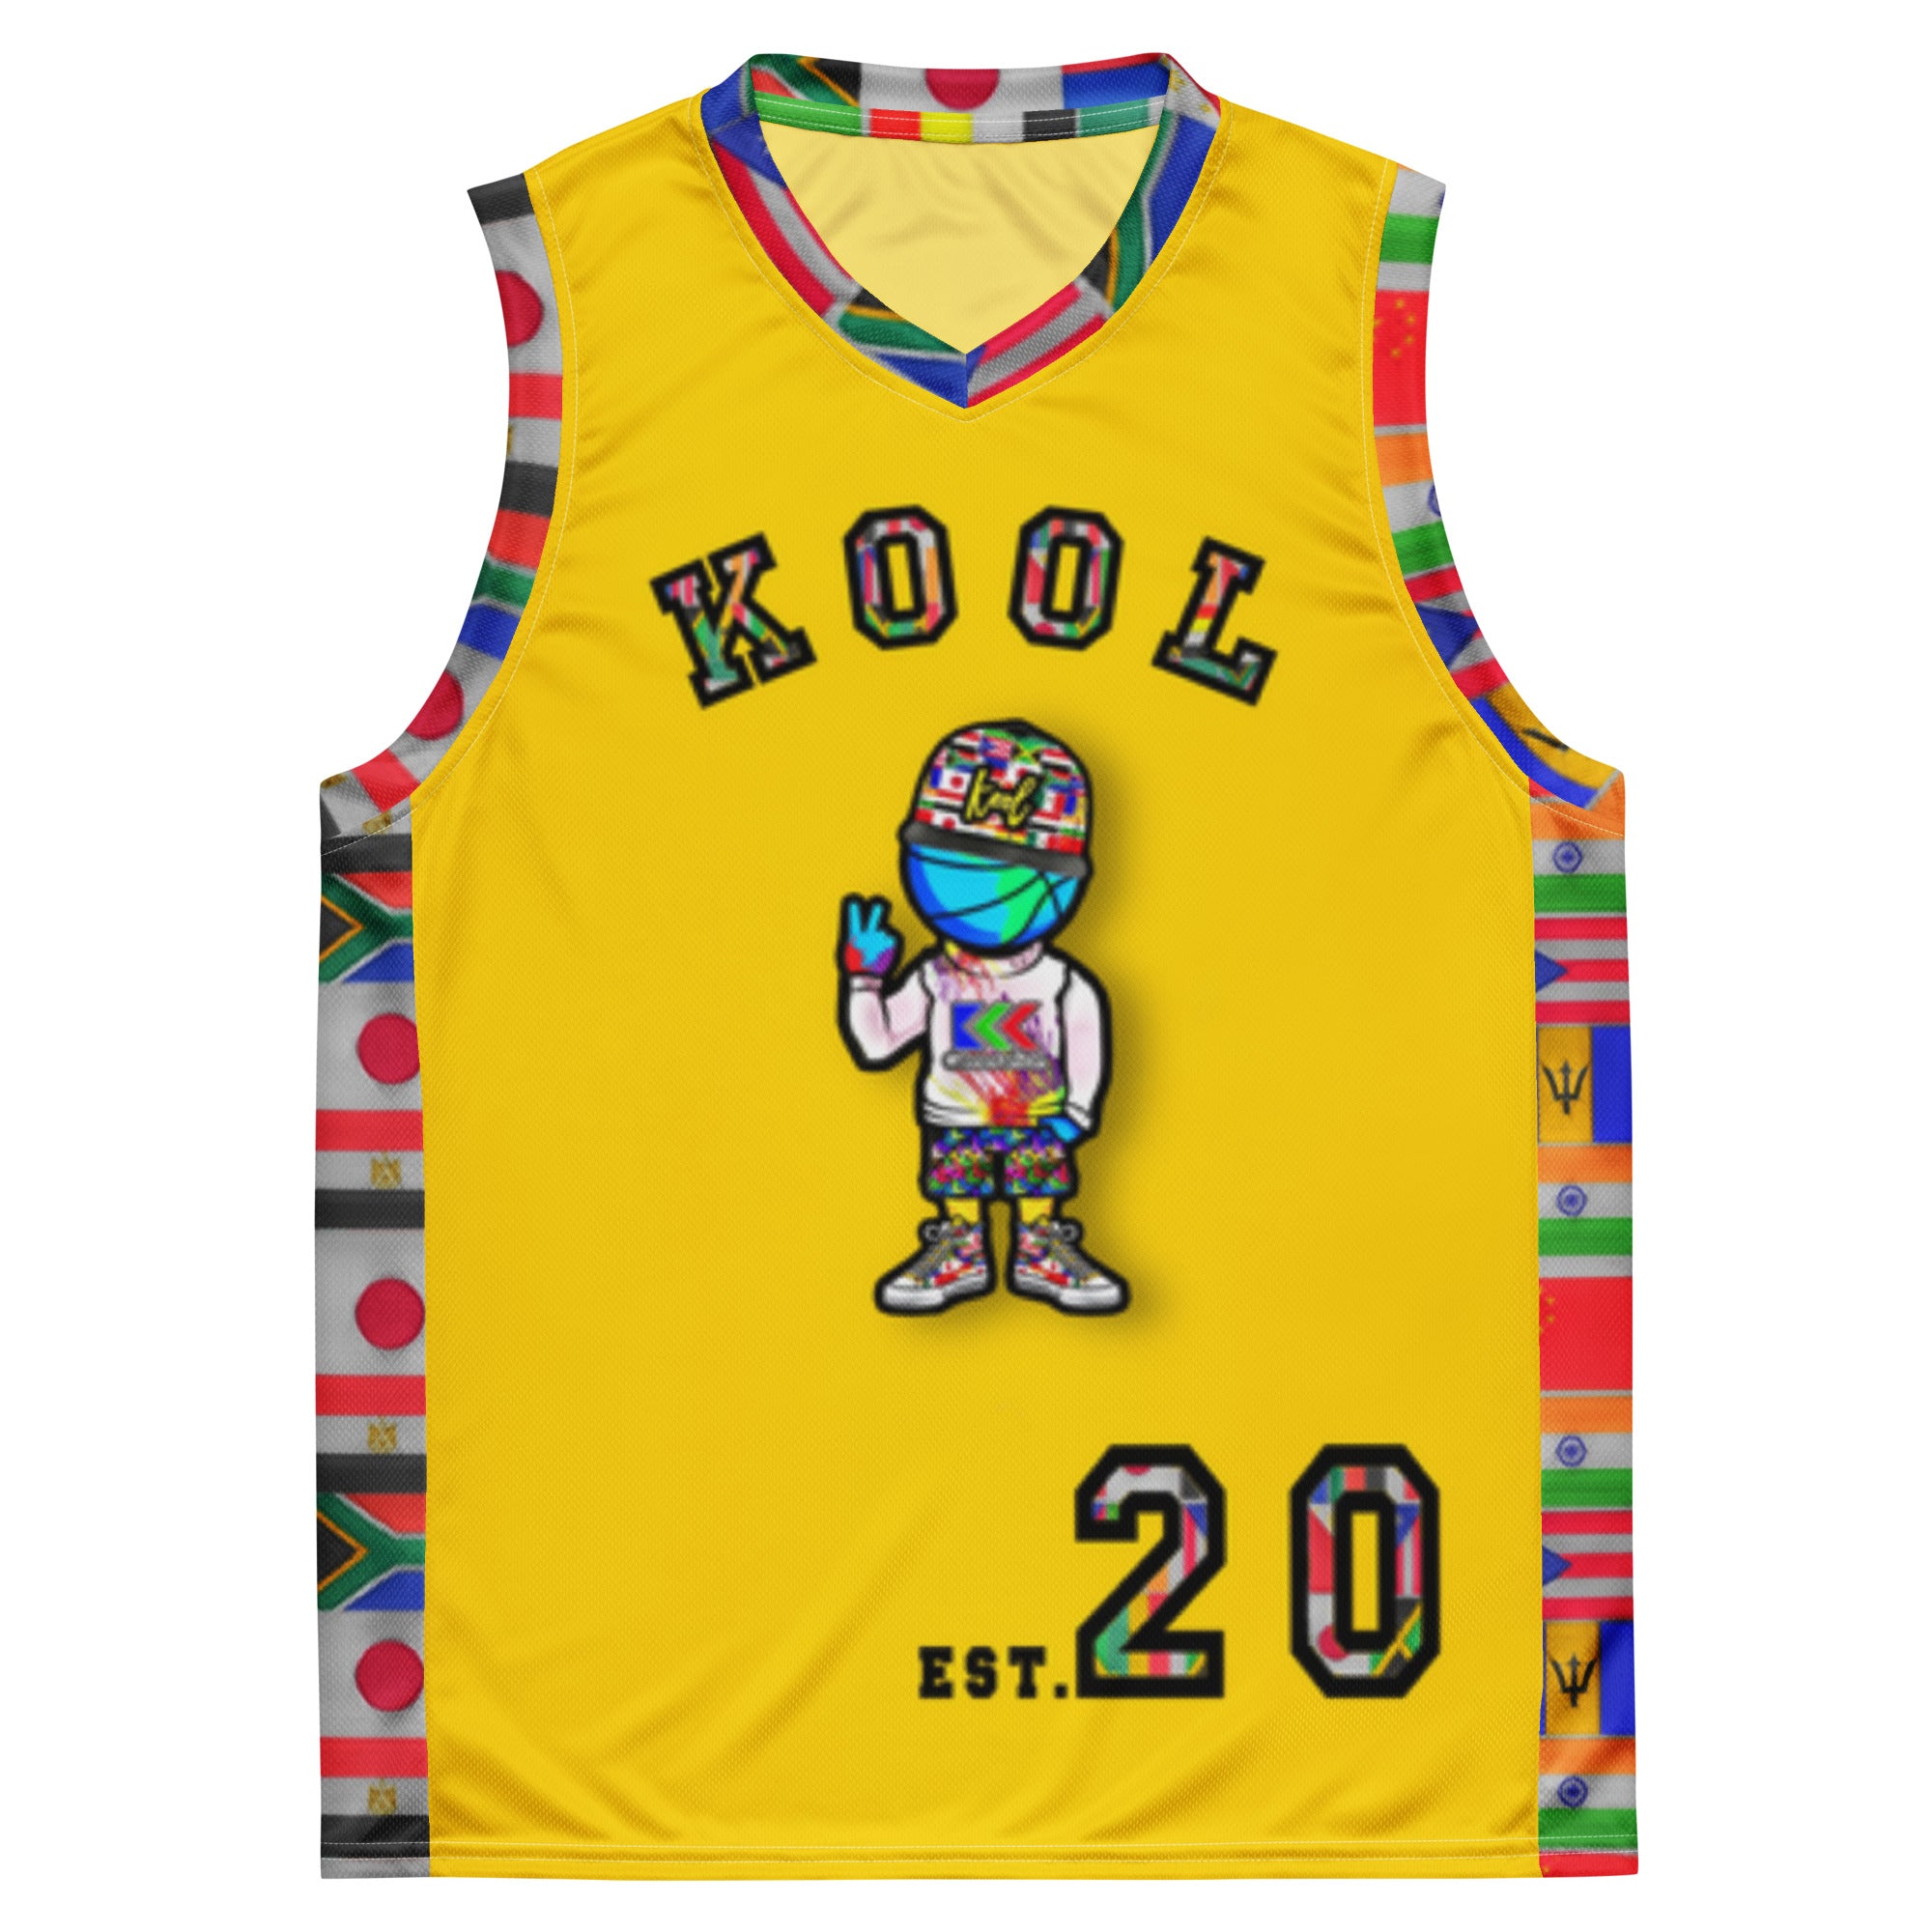 Kool Kid Recycled  basketball jersey